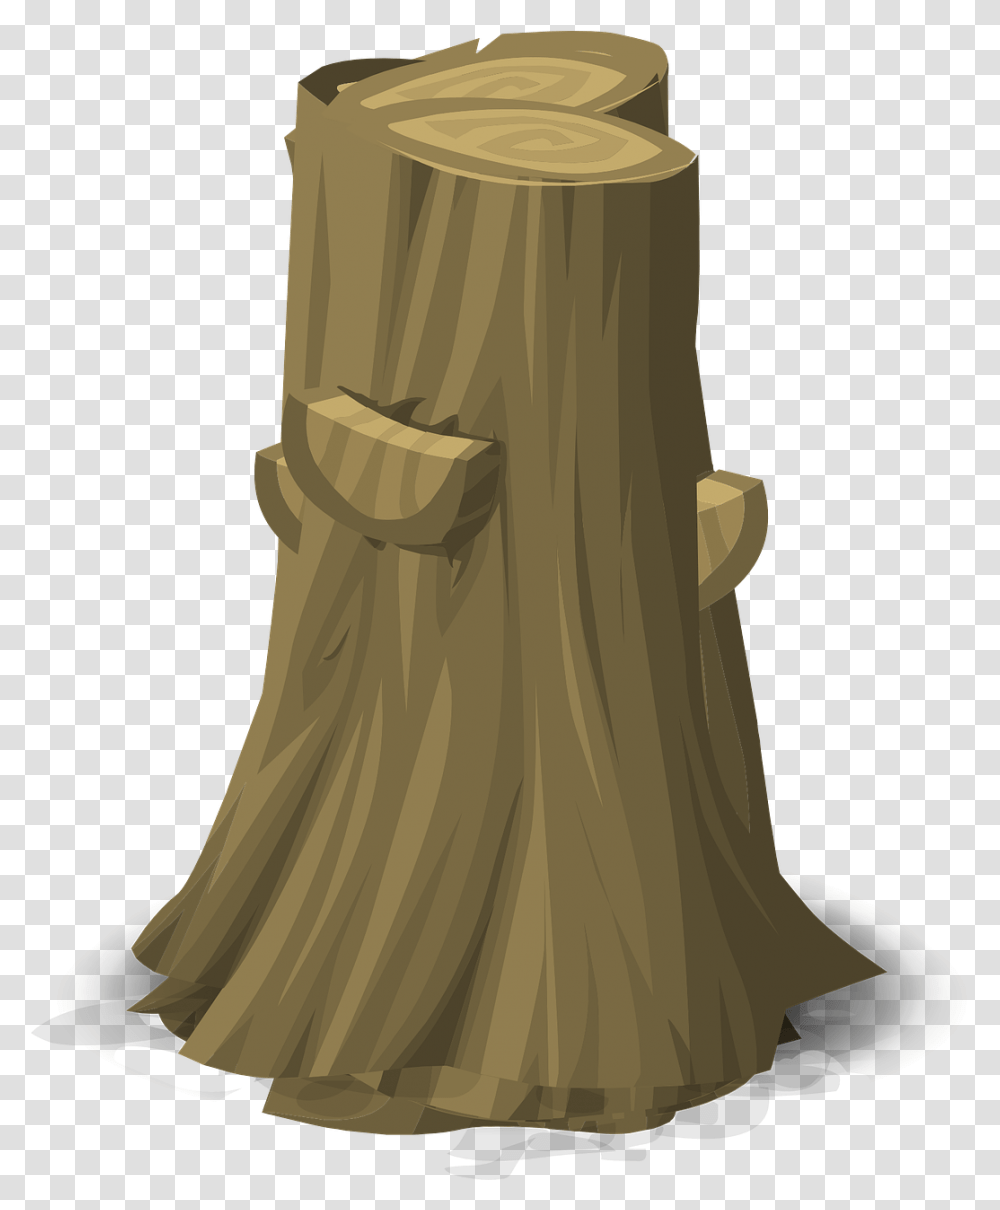 Stump Tree Log Trunk Cut Image Cut Tree, Tree Stump, Wedding Gown, Robe, Fashion Transparent Png